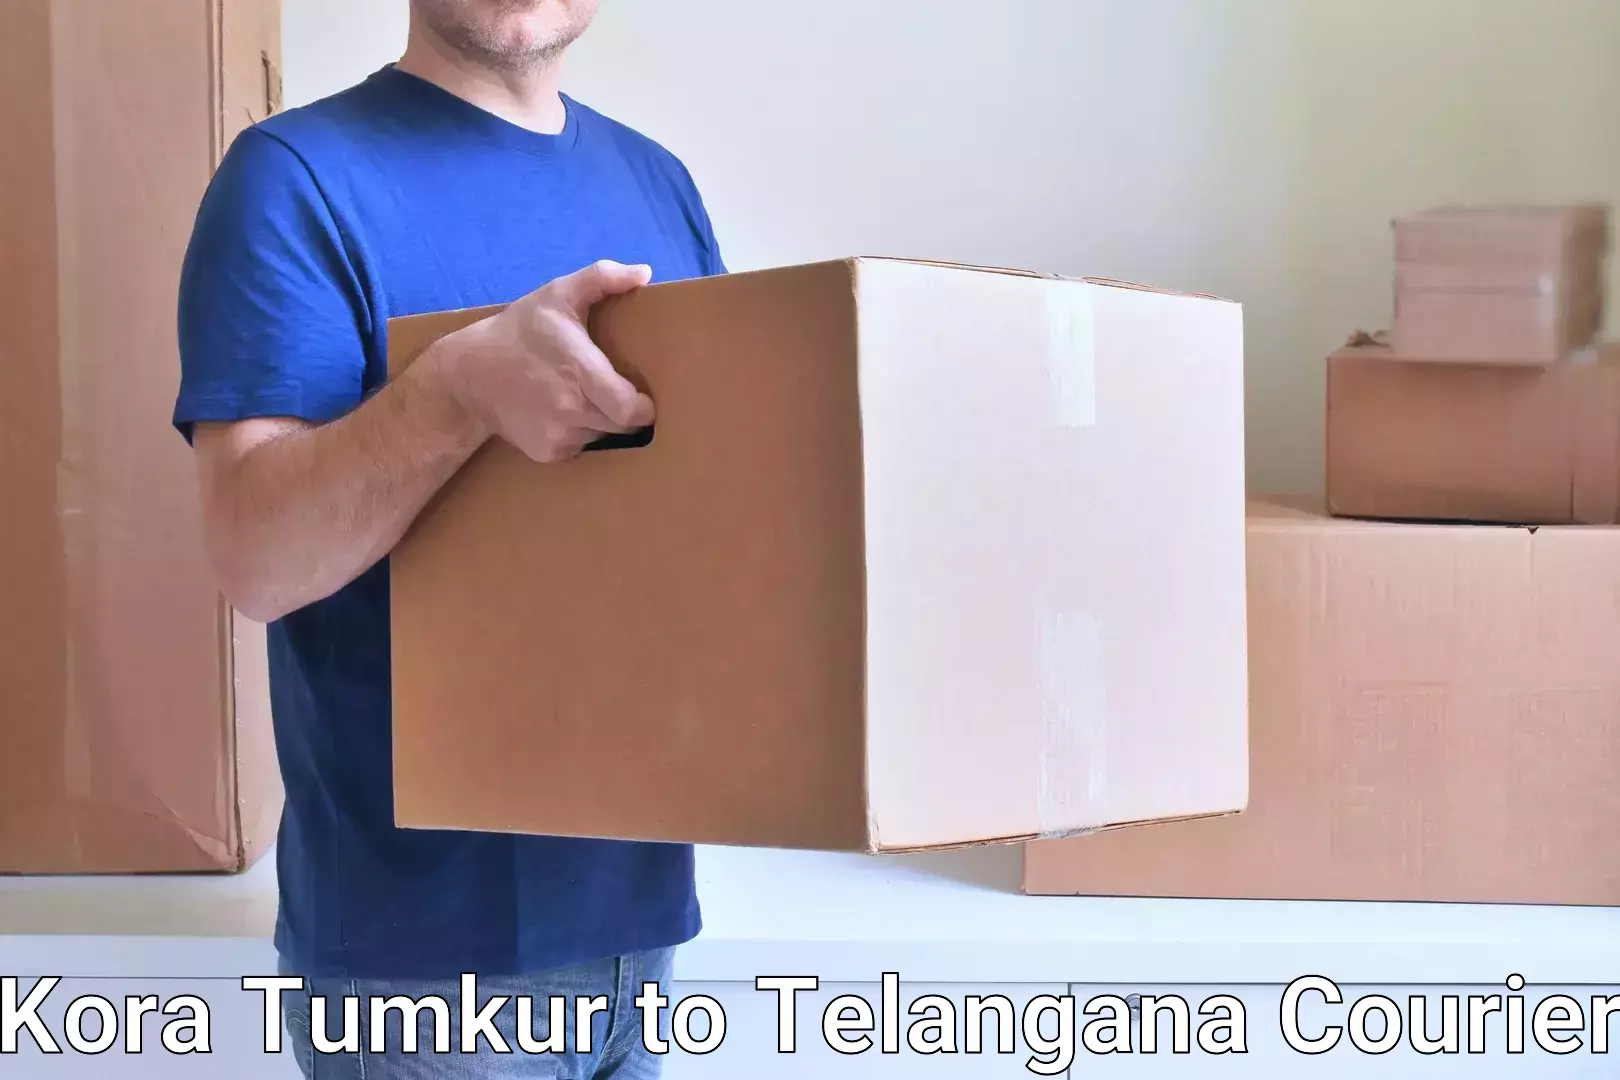 Customized delivery options in Kora Tumkur to Narsampet